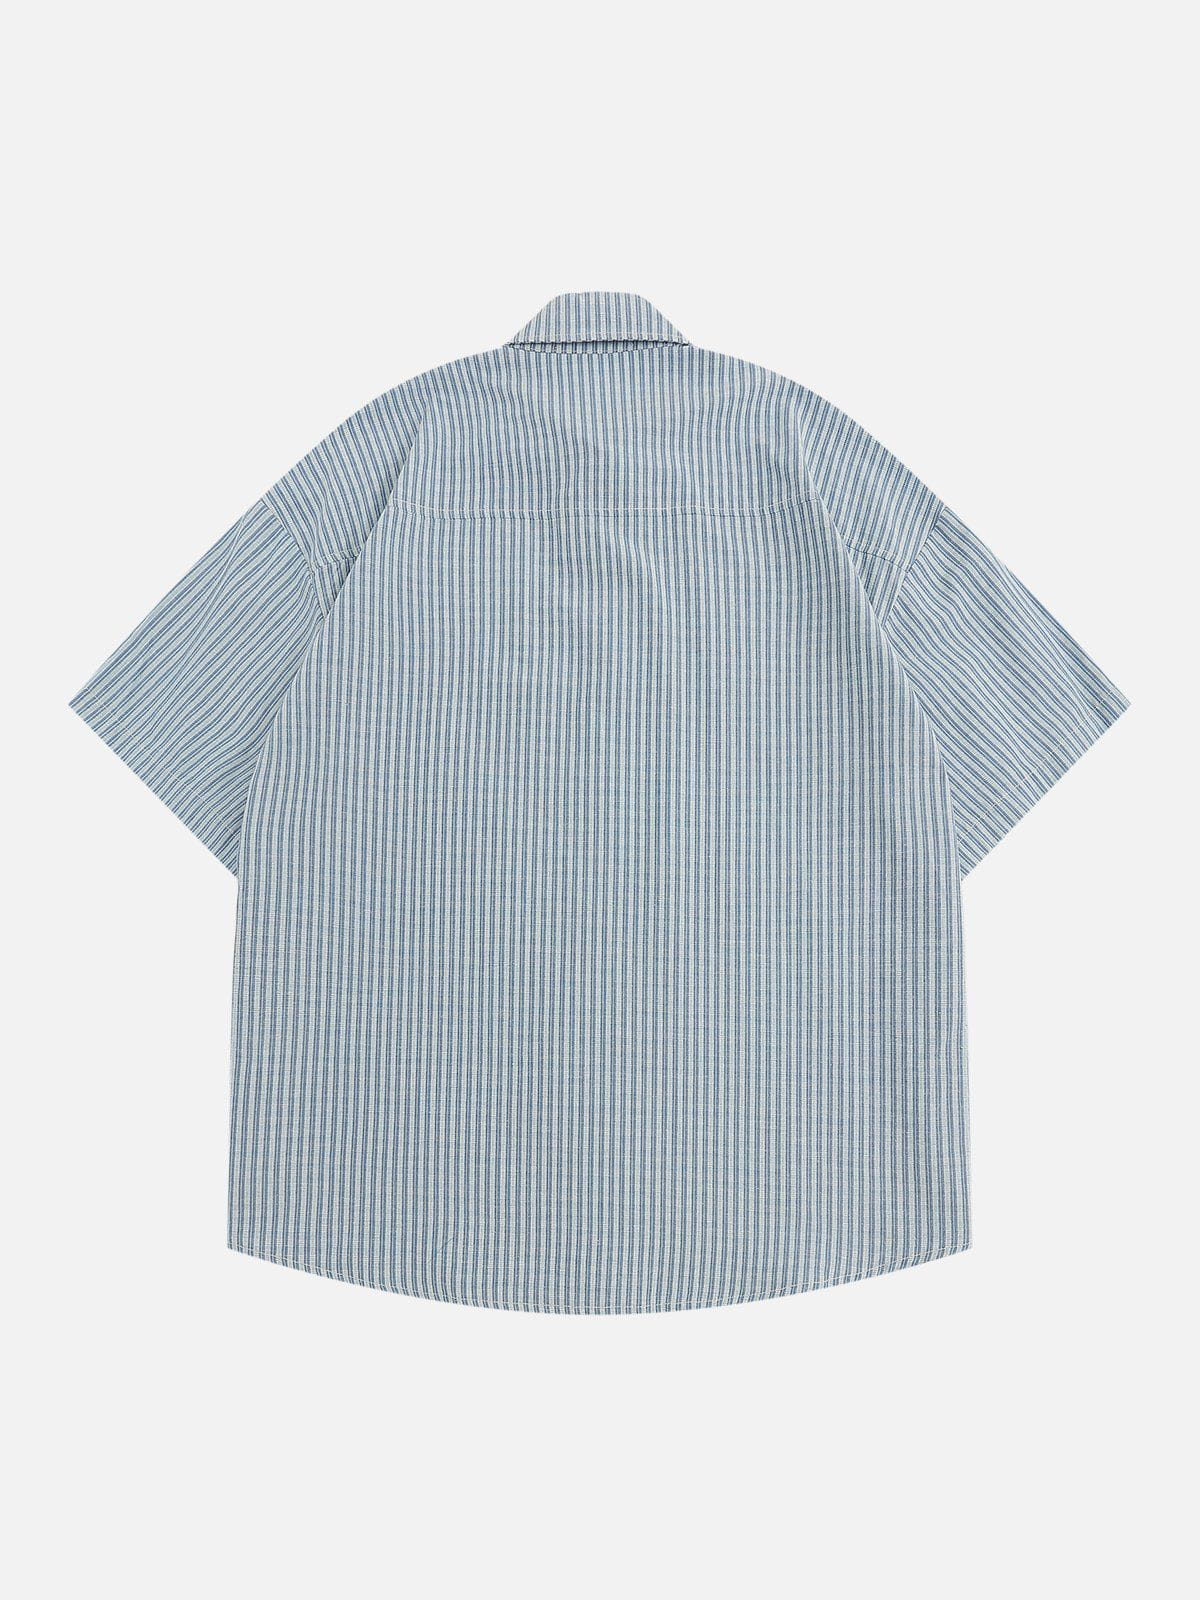 Eprezzy® - Flower Applique Short Sleeve Shirts Streetwear Fashion - eprezzy.com